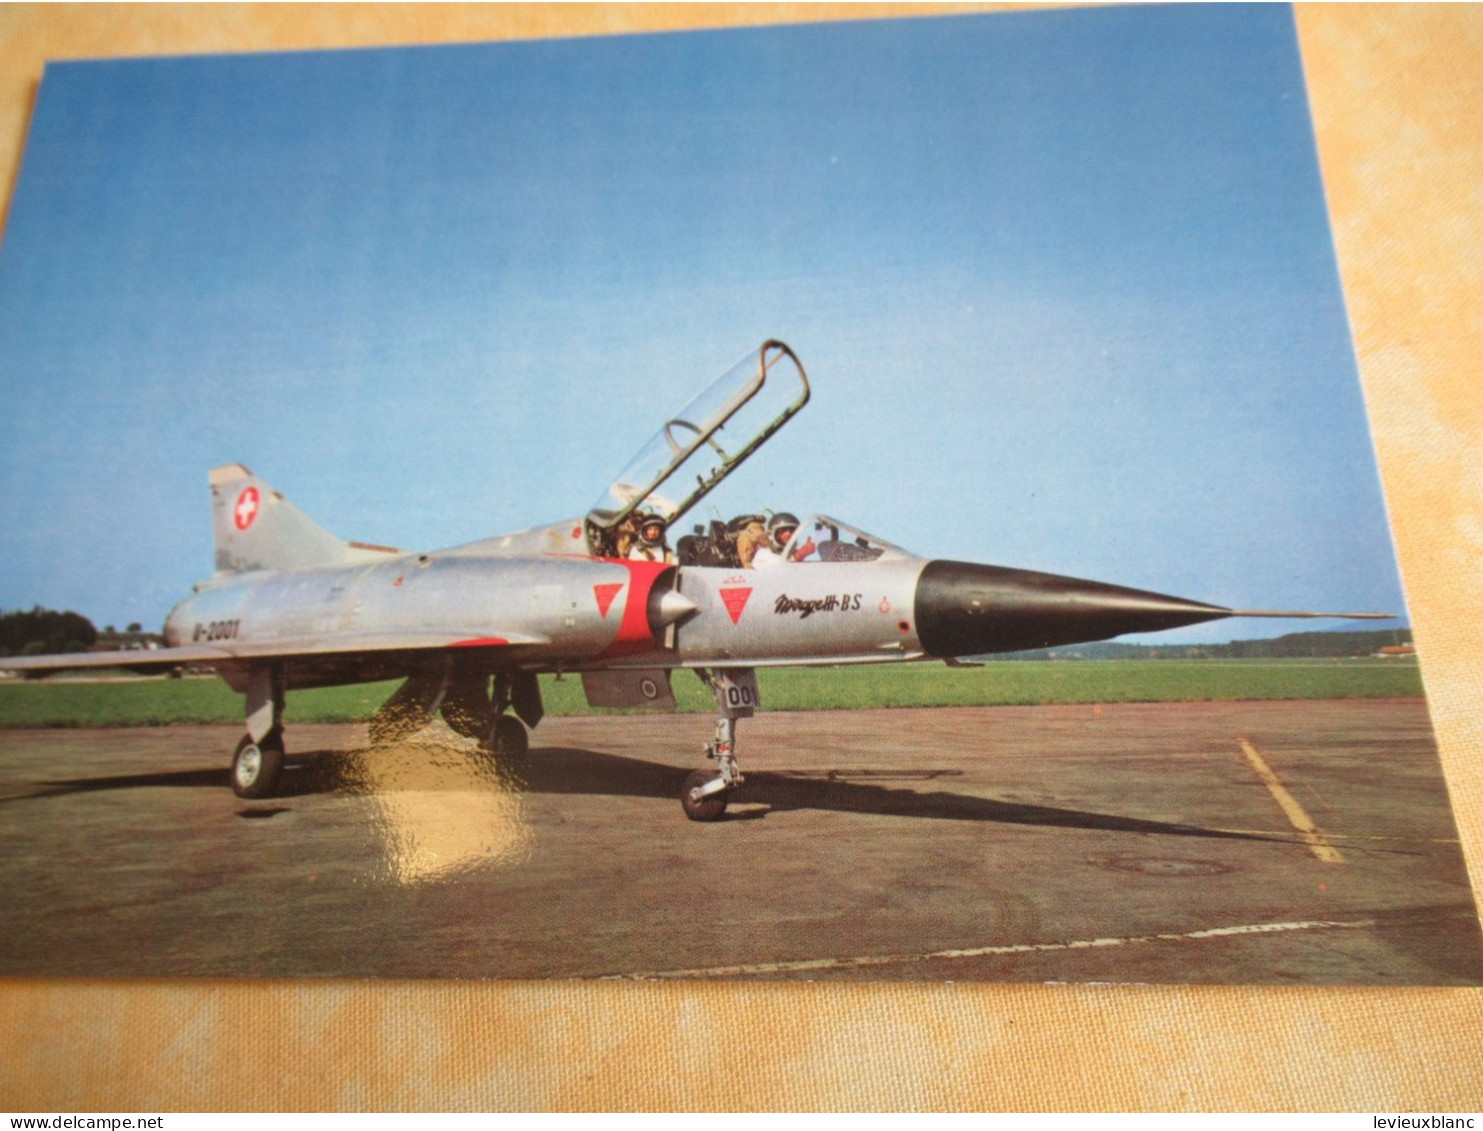 Militaria/ Aviation Suisse / 7 Cartes Postales  De Mirages/ Payerne / 1970     AV38 - Fliegerei